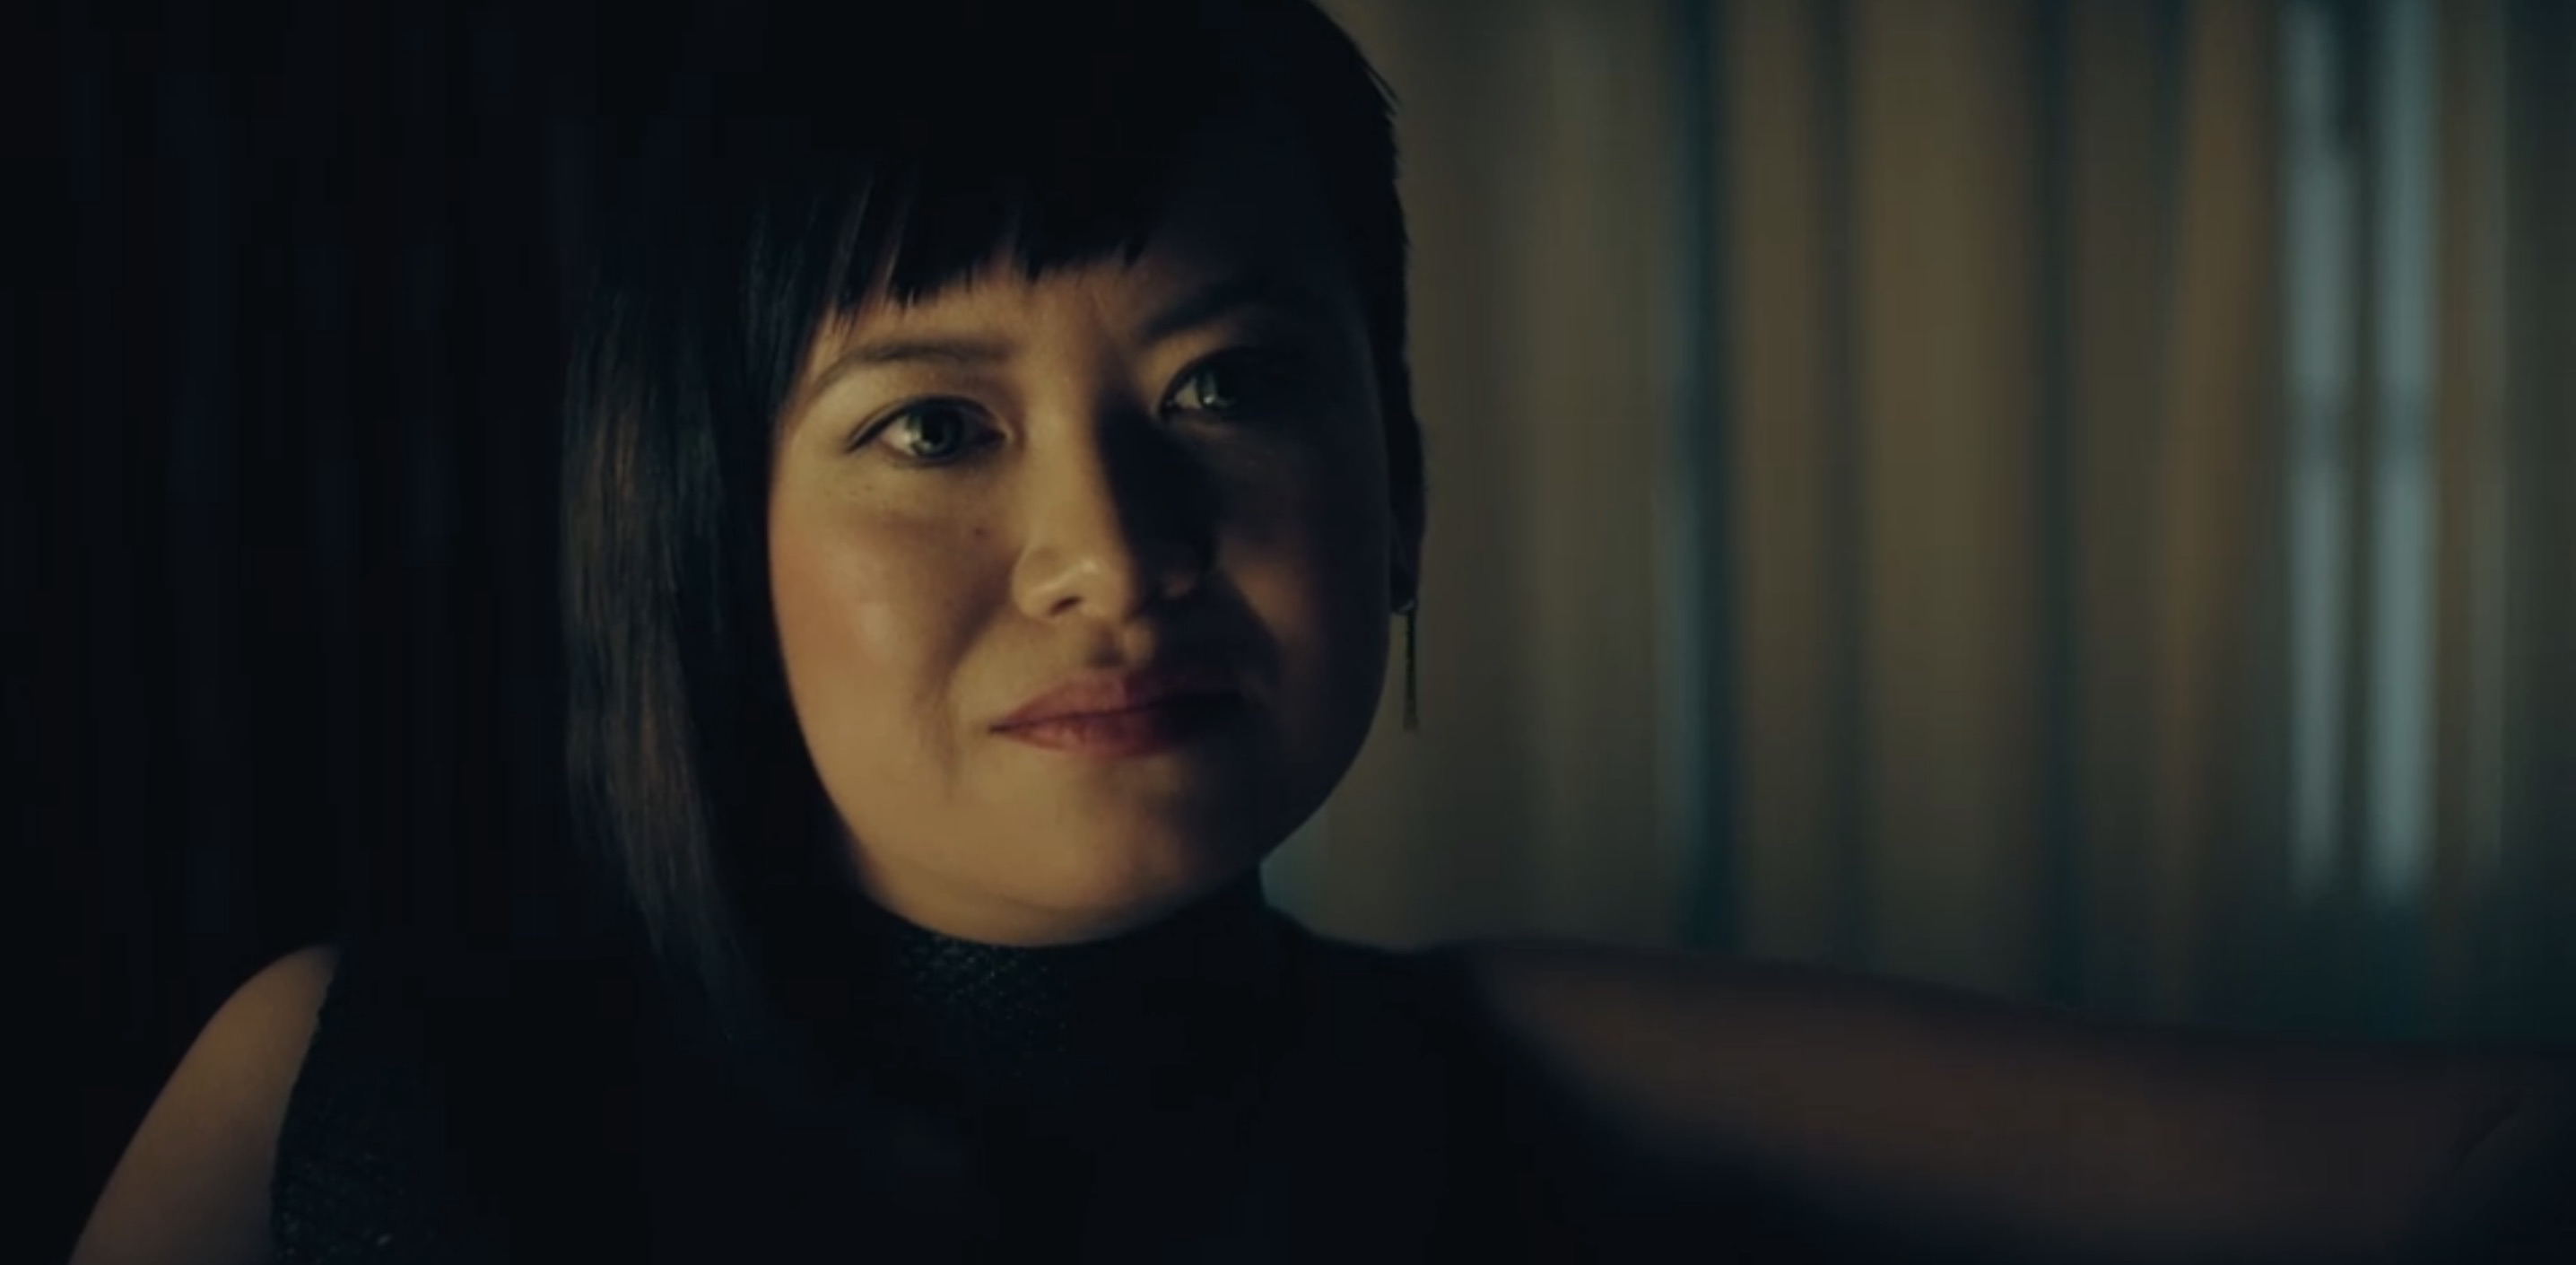 The Peripheral Cast on Amazon - Katie Leung as Ash